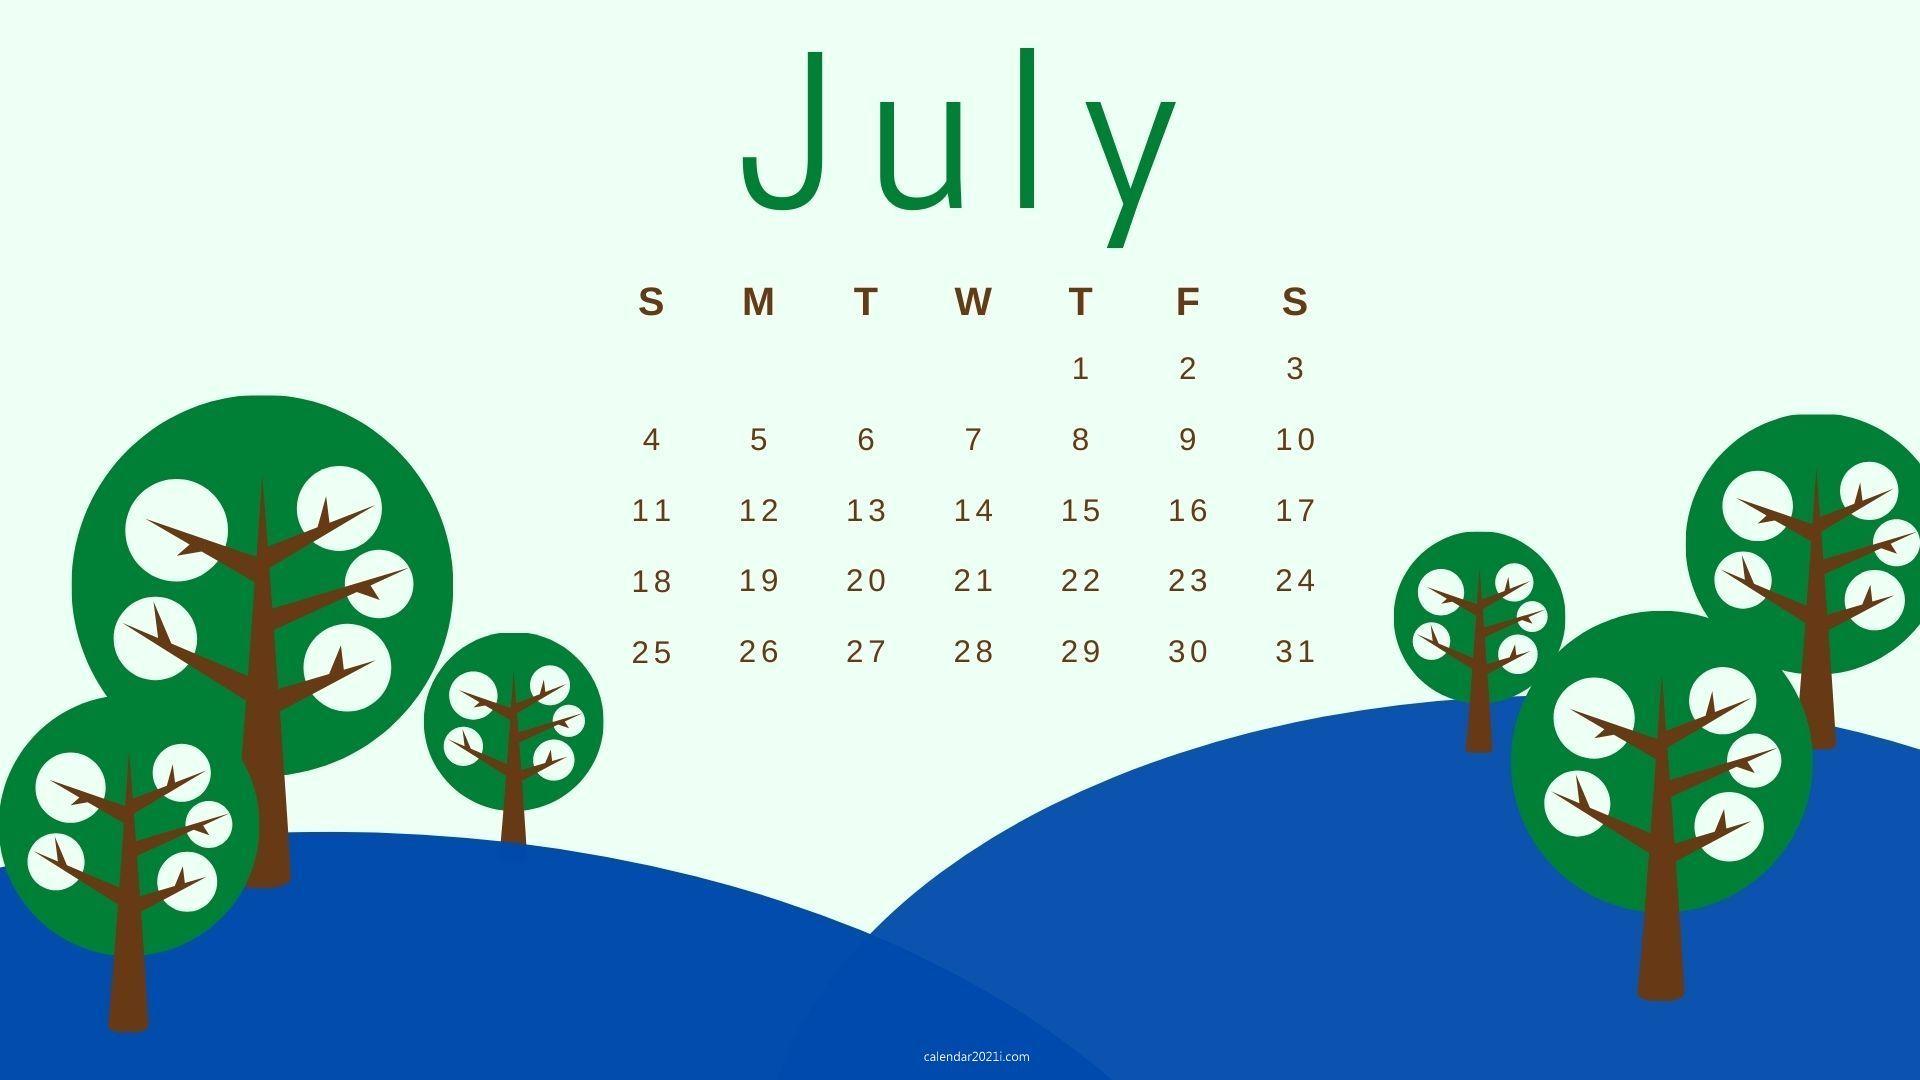 July 2021 Calendar Wallpapers Top Free July 2021 Calendar Backgrounds